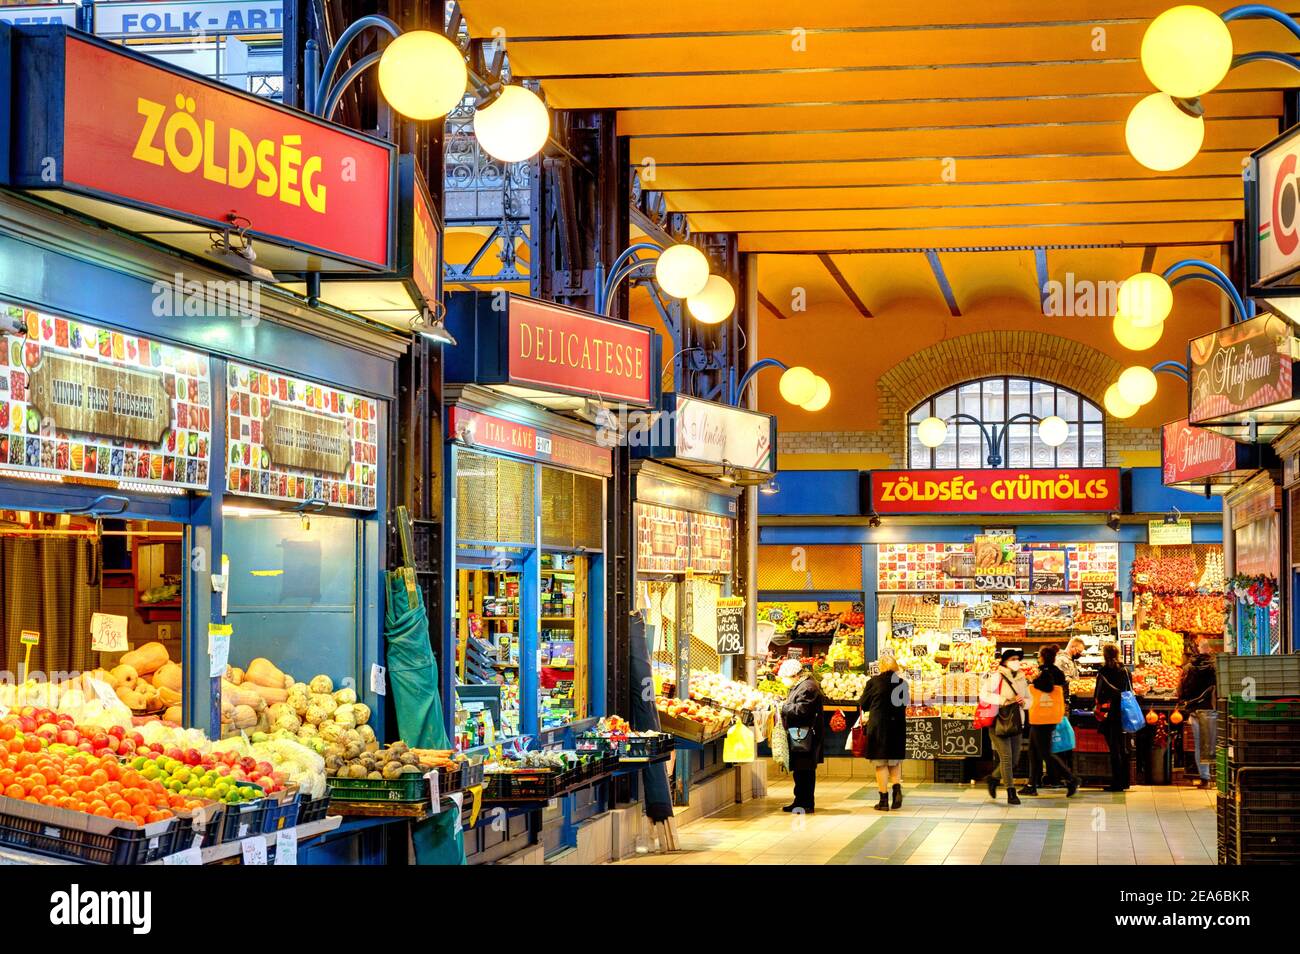 Grande salle du marché, Budapest, HDR image Banque D'Images